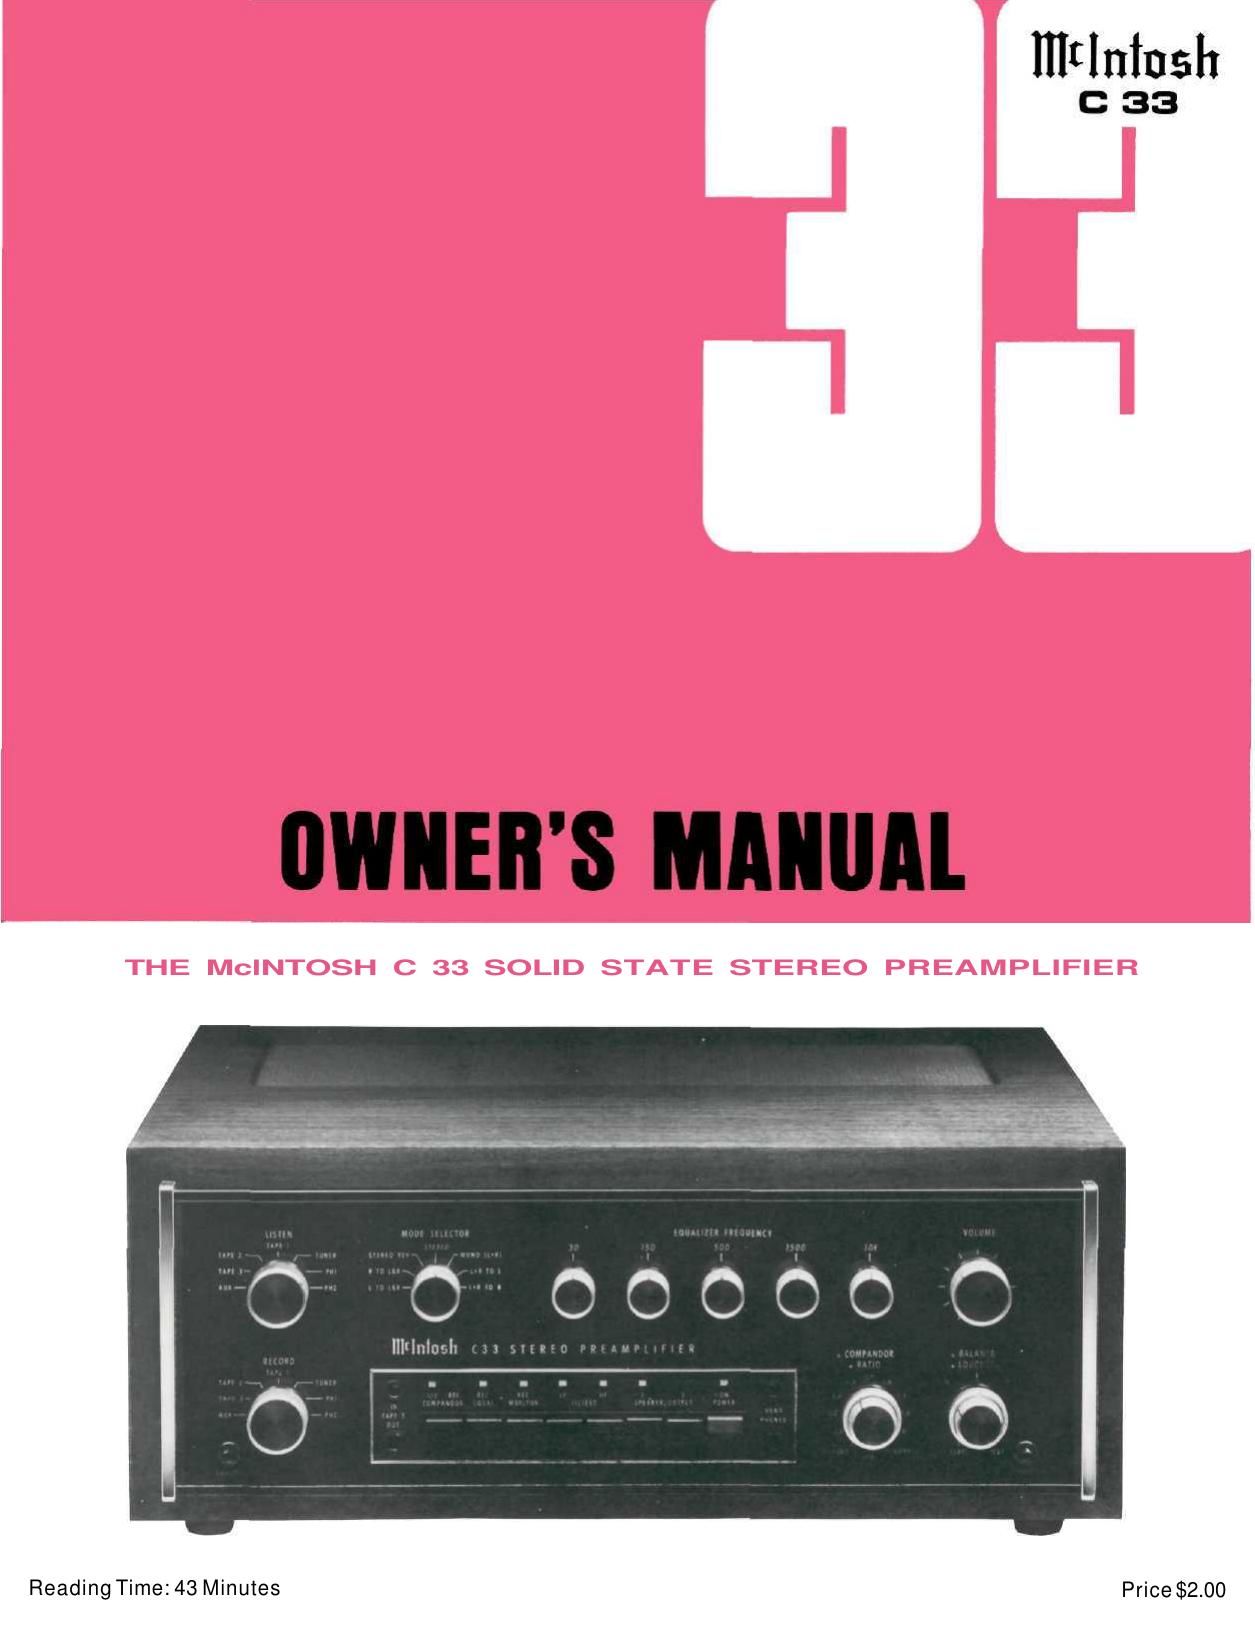 McIntosh C33 Owners Manual